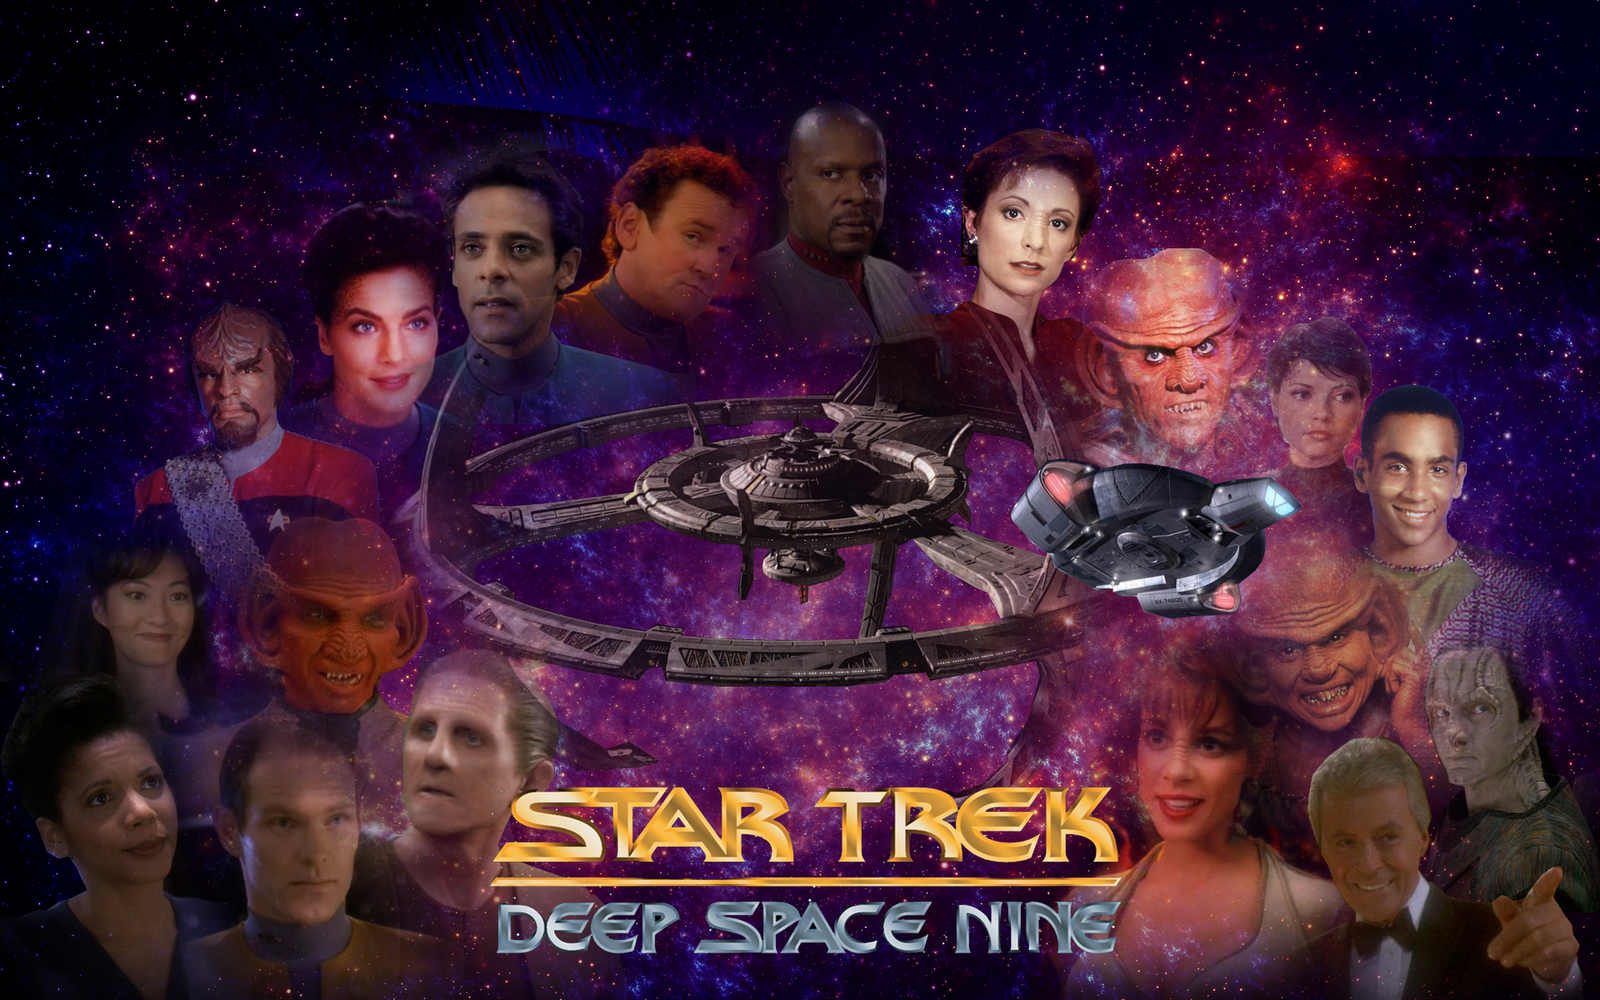 nine space sex deep trek Star